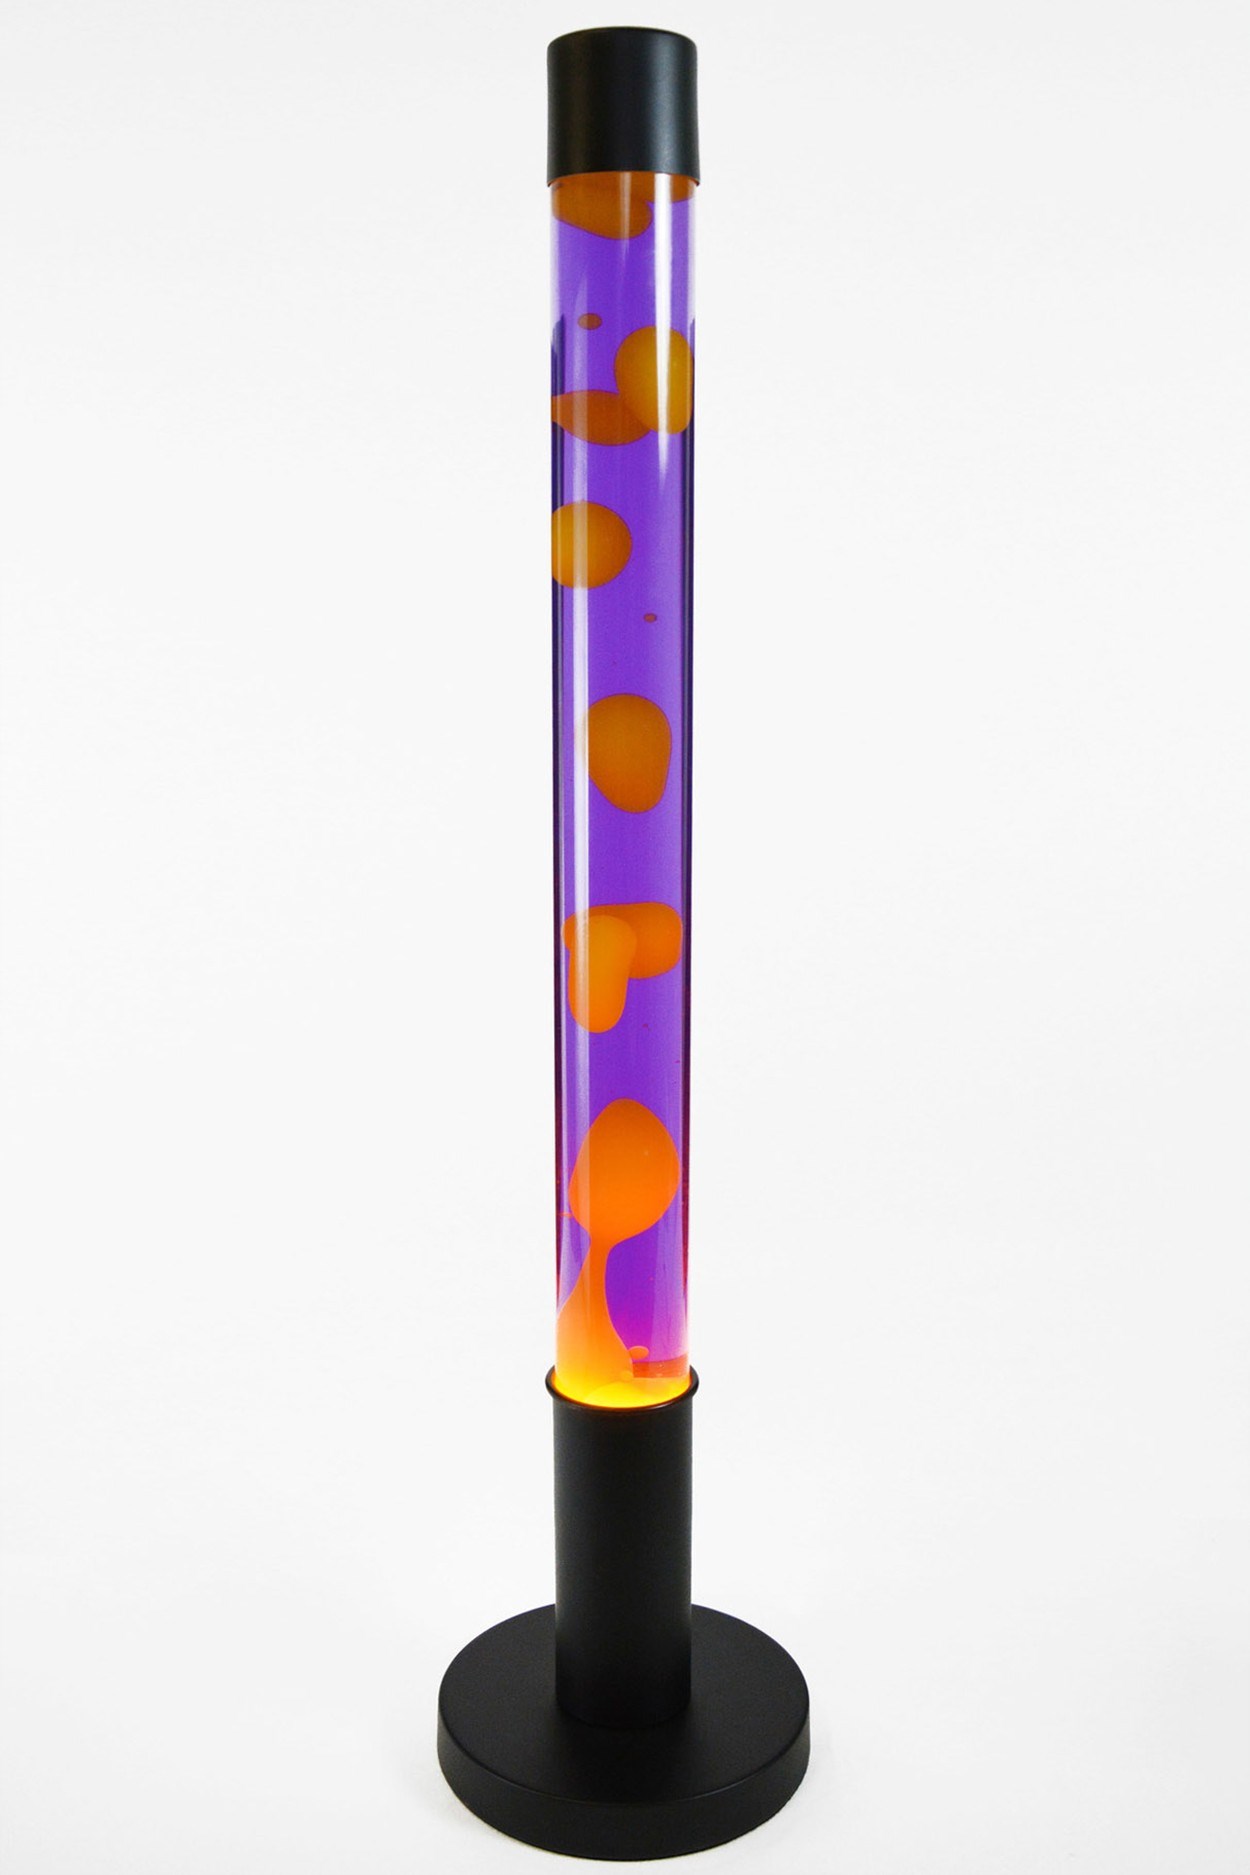 Напольная лава-лампа 75 см., оранжевая/фиолетовая | Подарки.ру